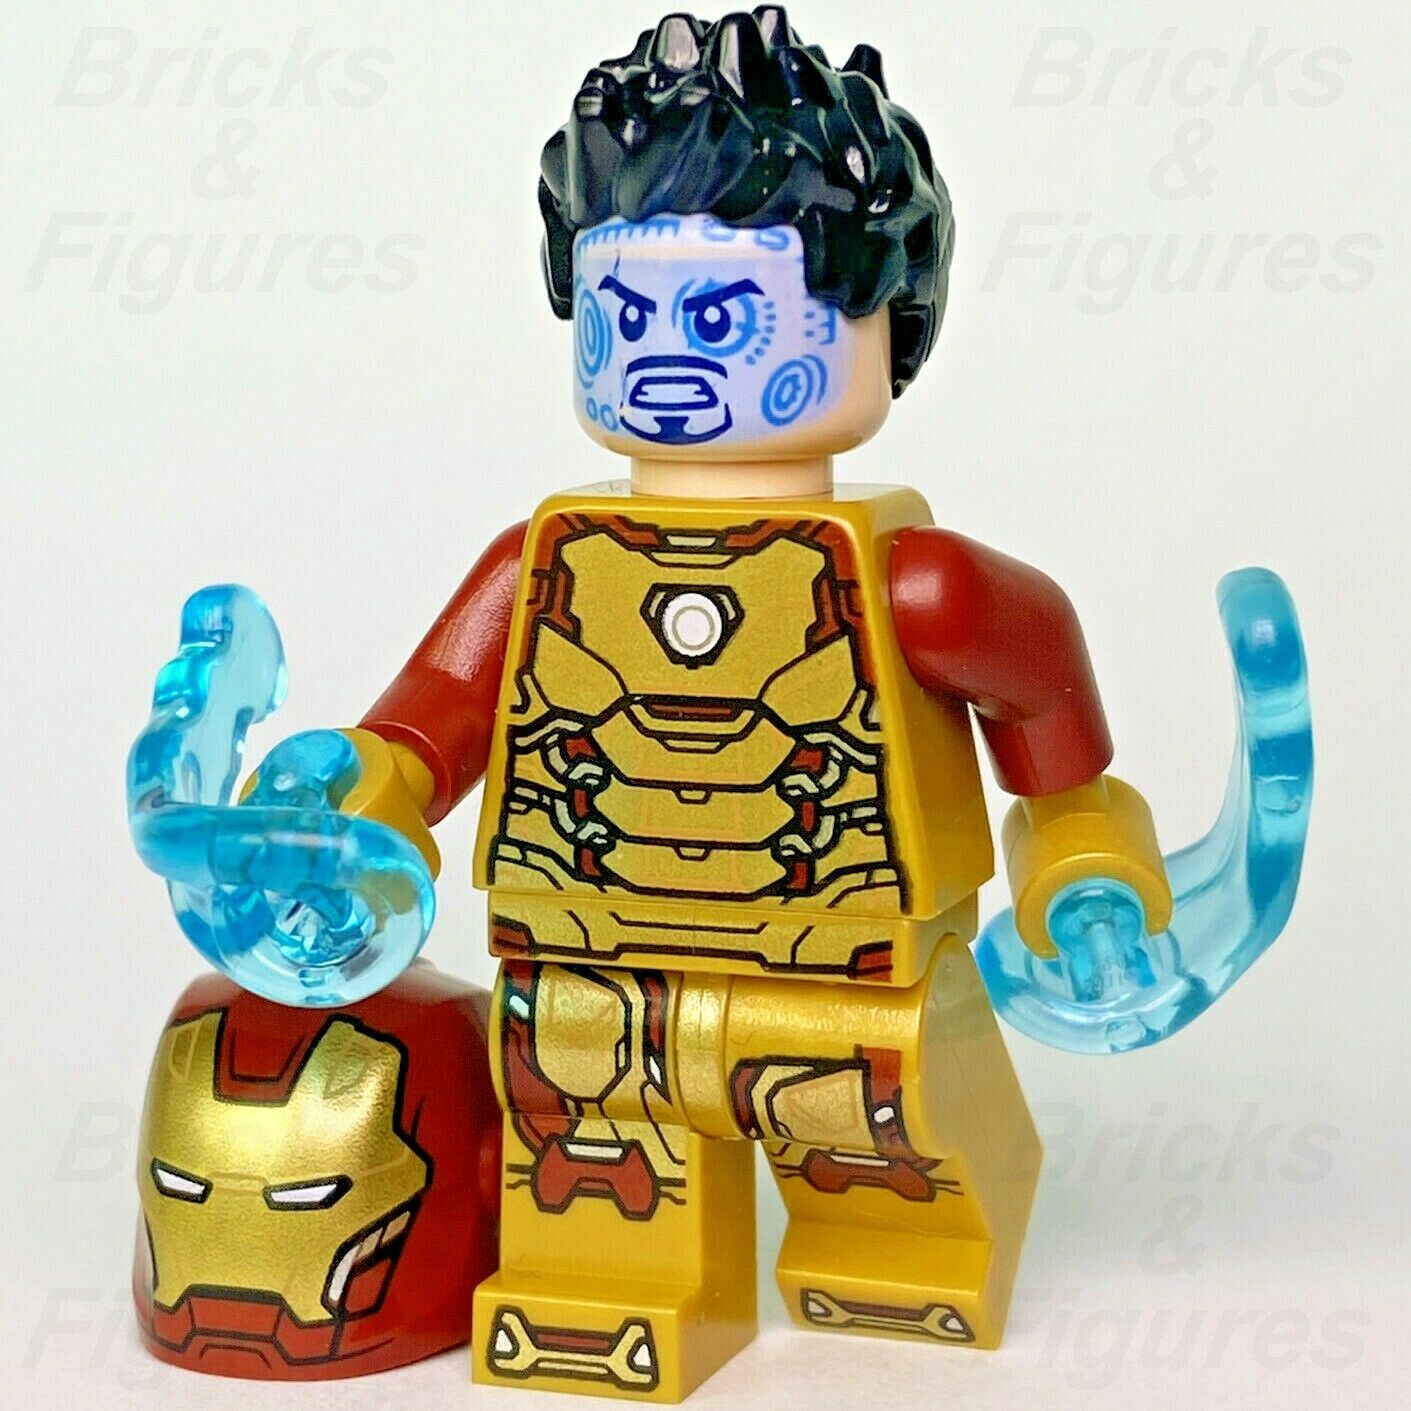 Marvel Super Heroes LEGO Iron Man Mark 42 Armor Suit Avengers Minifigure 76203 - Bricks & Figures